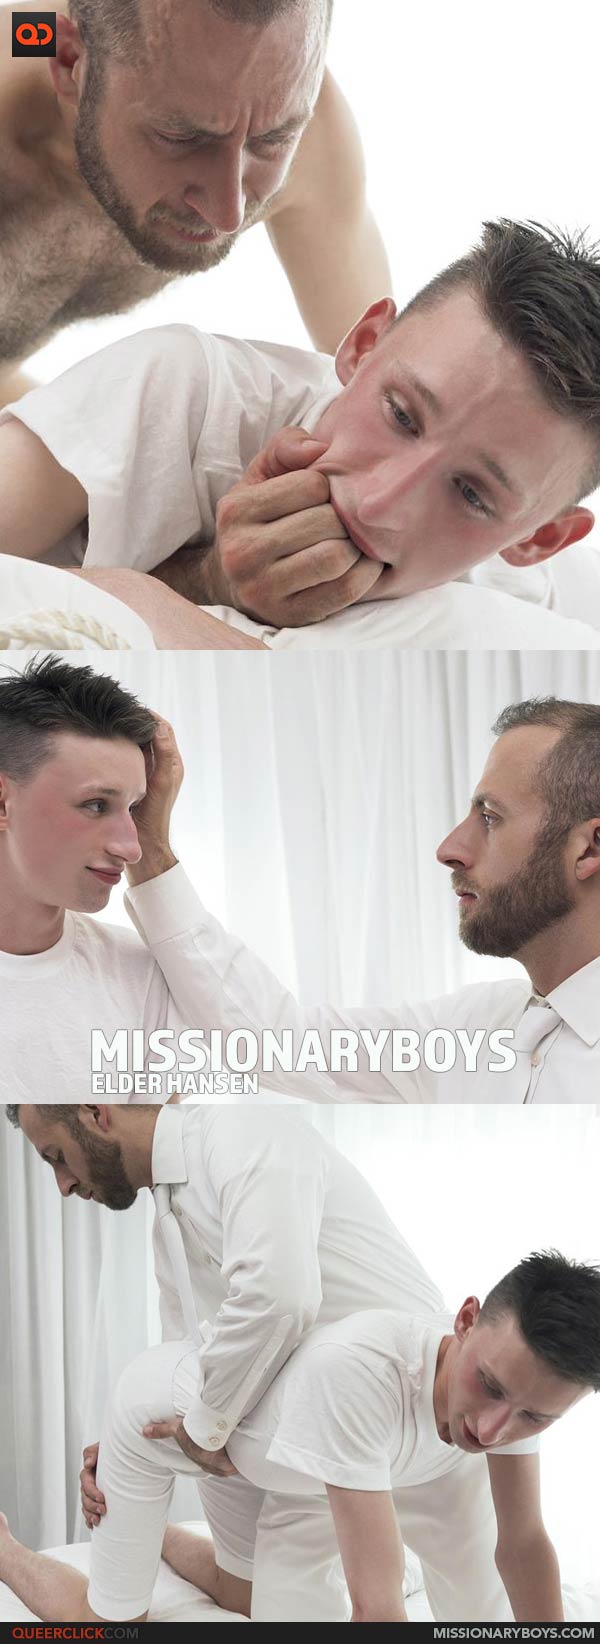 Missionary Boys: Elder Hansen – Second Anointing